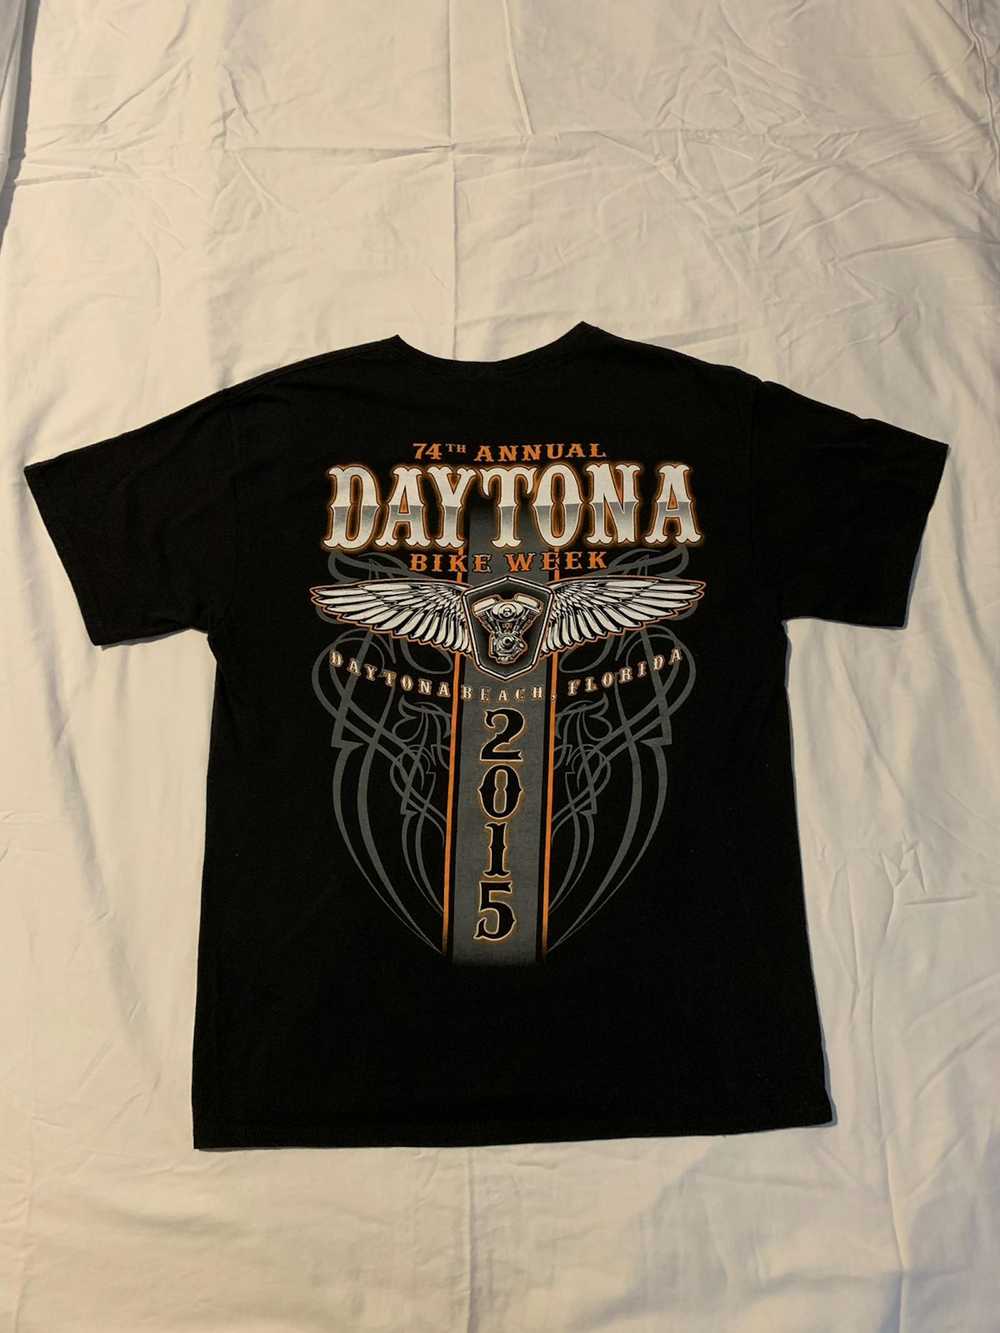 Delta 2015 Daytona Bike Week t-shirt - image 2